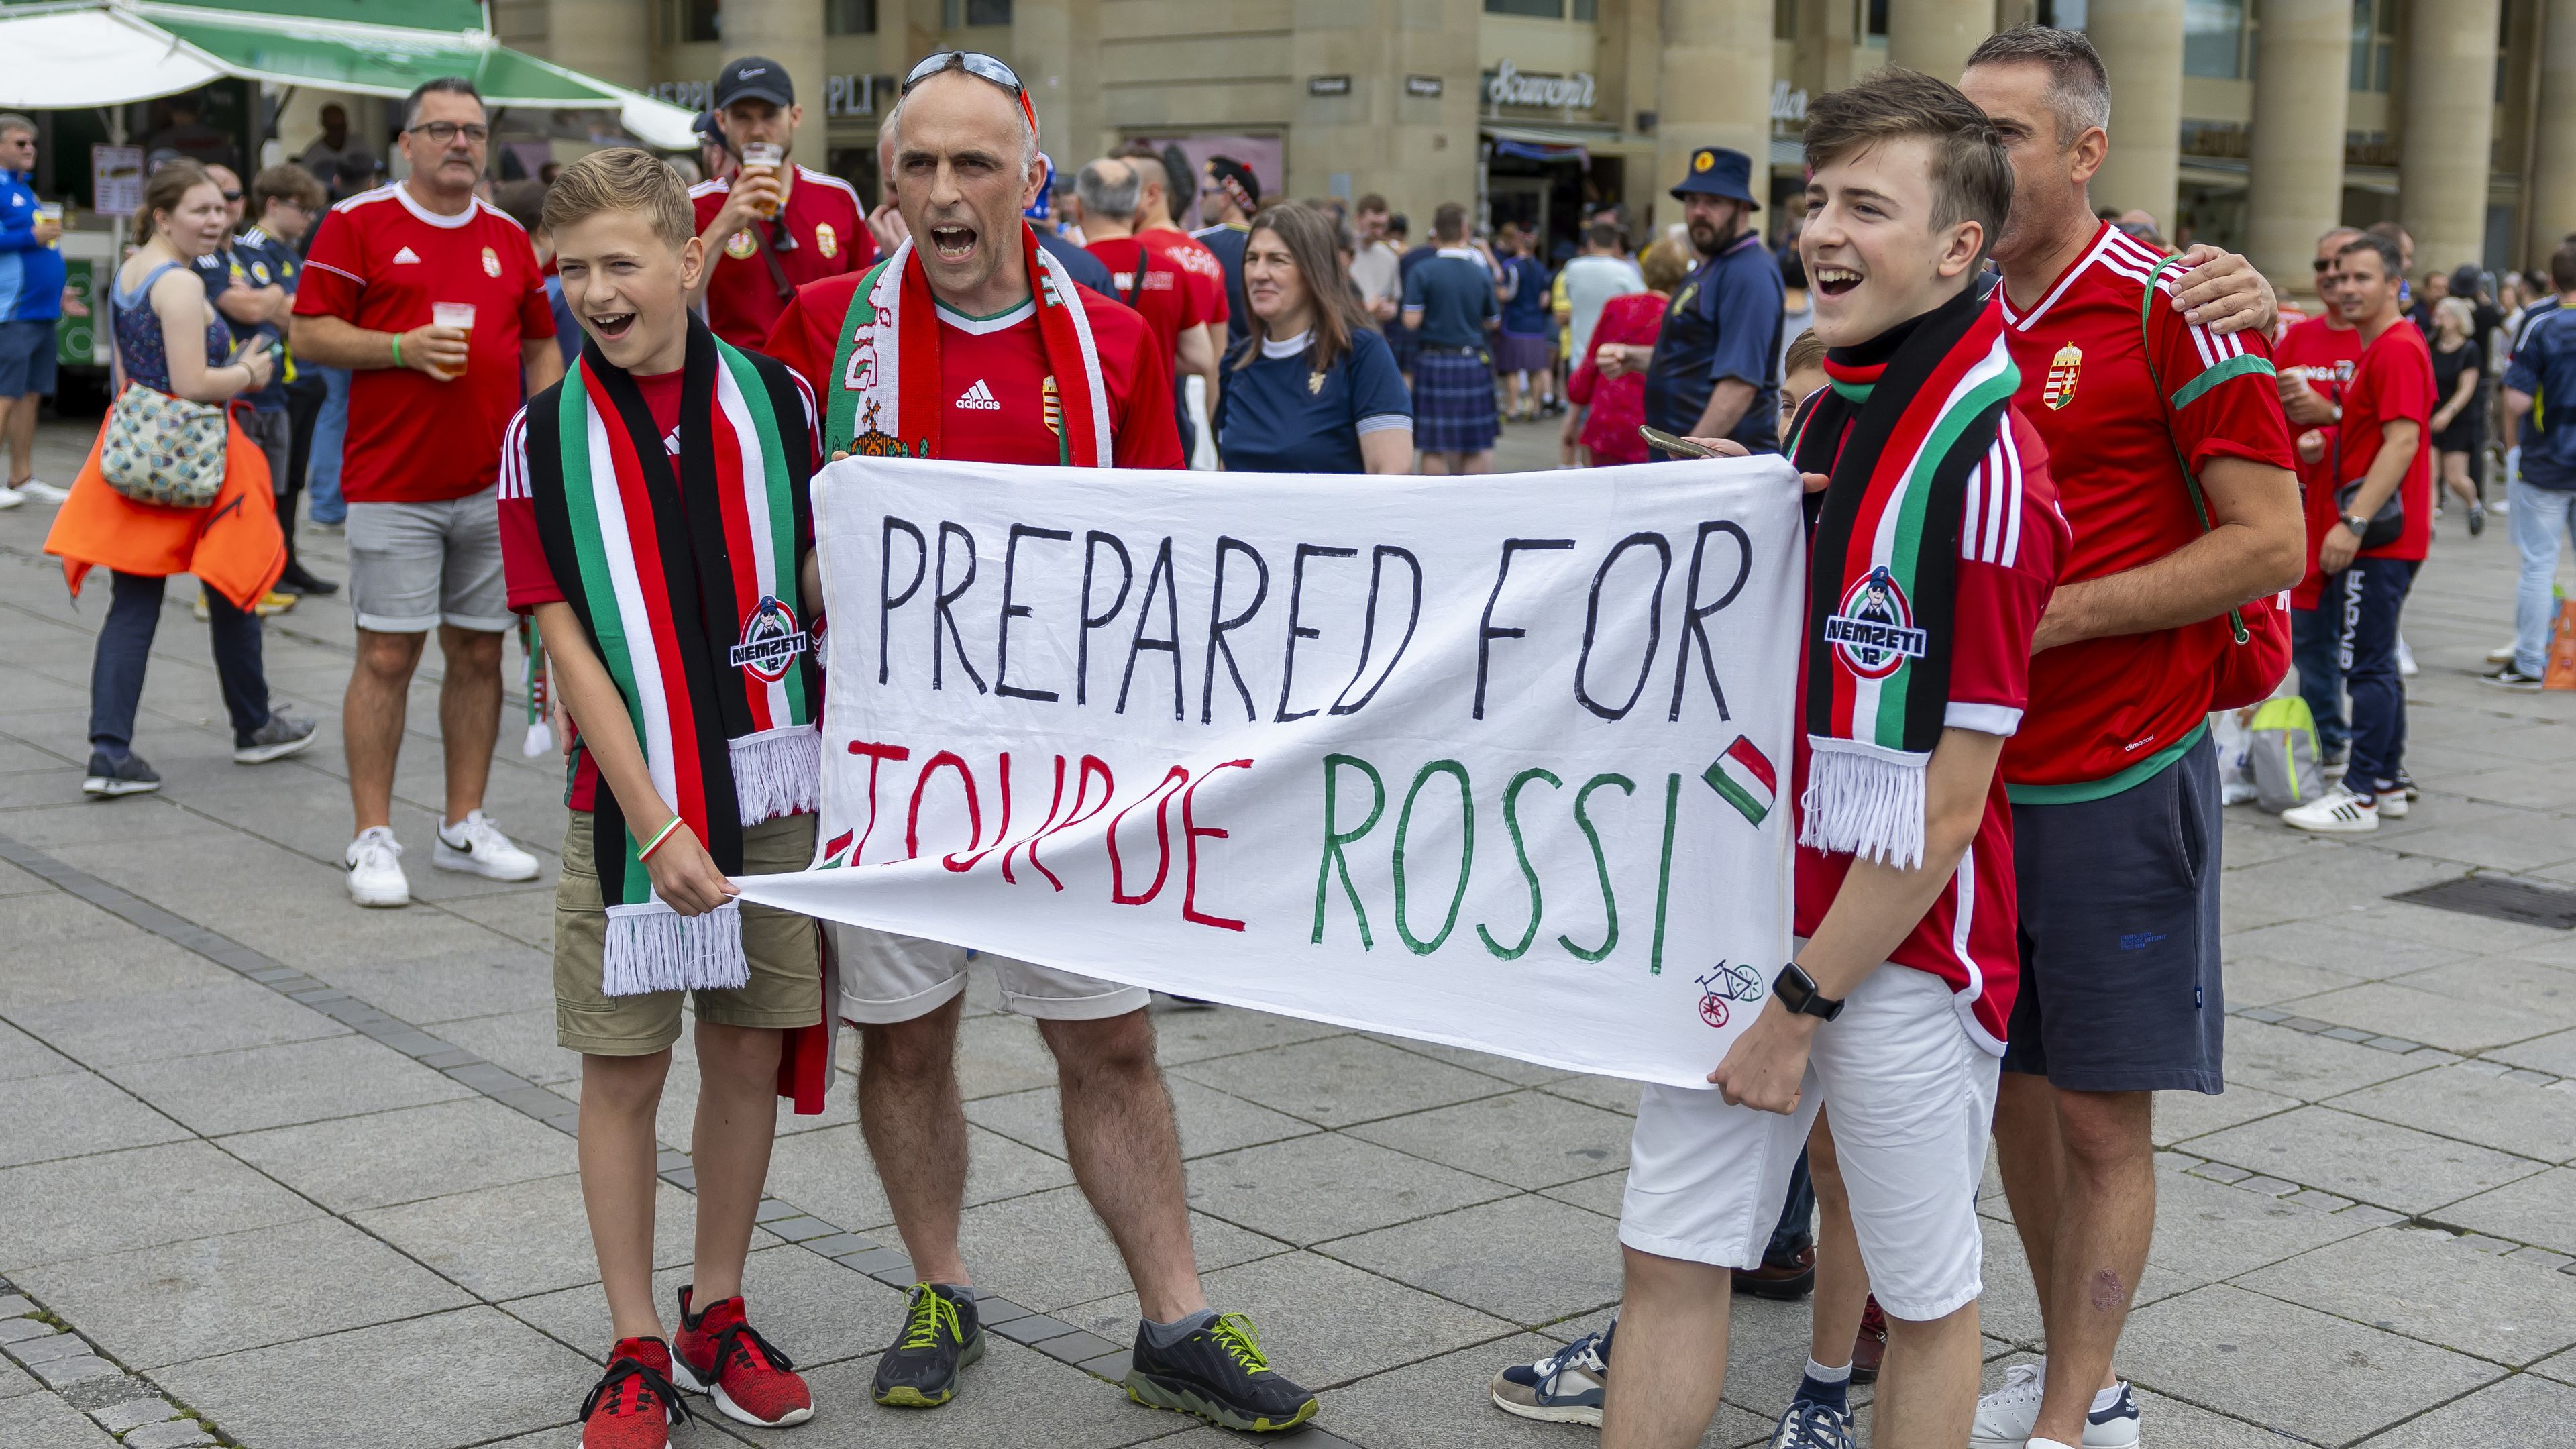 Galéria: McMaradona és a Tour de Rossi – így hangolnak a drukkerek a skót-magyarra